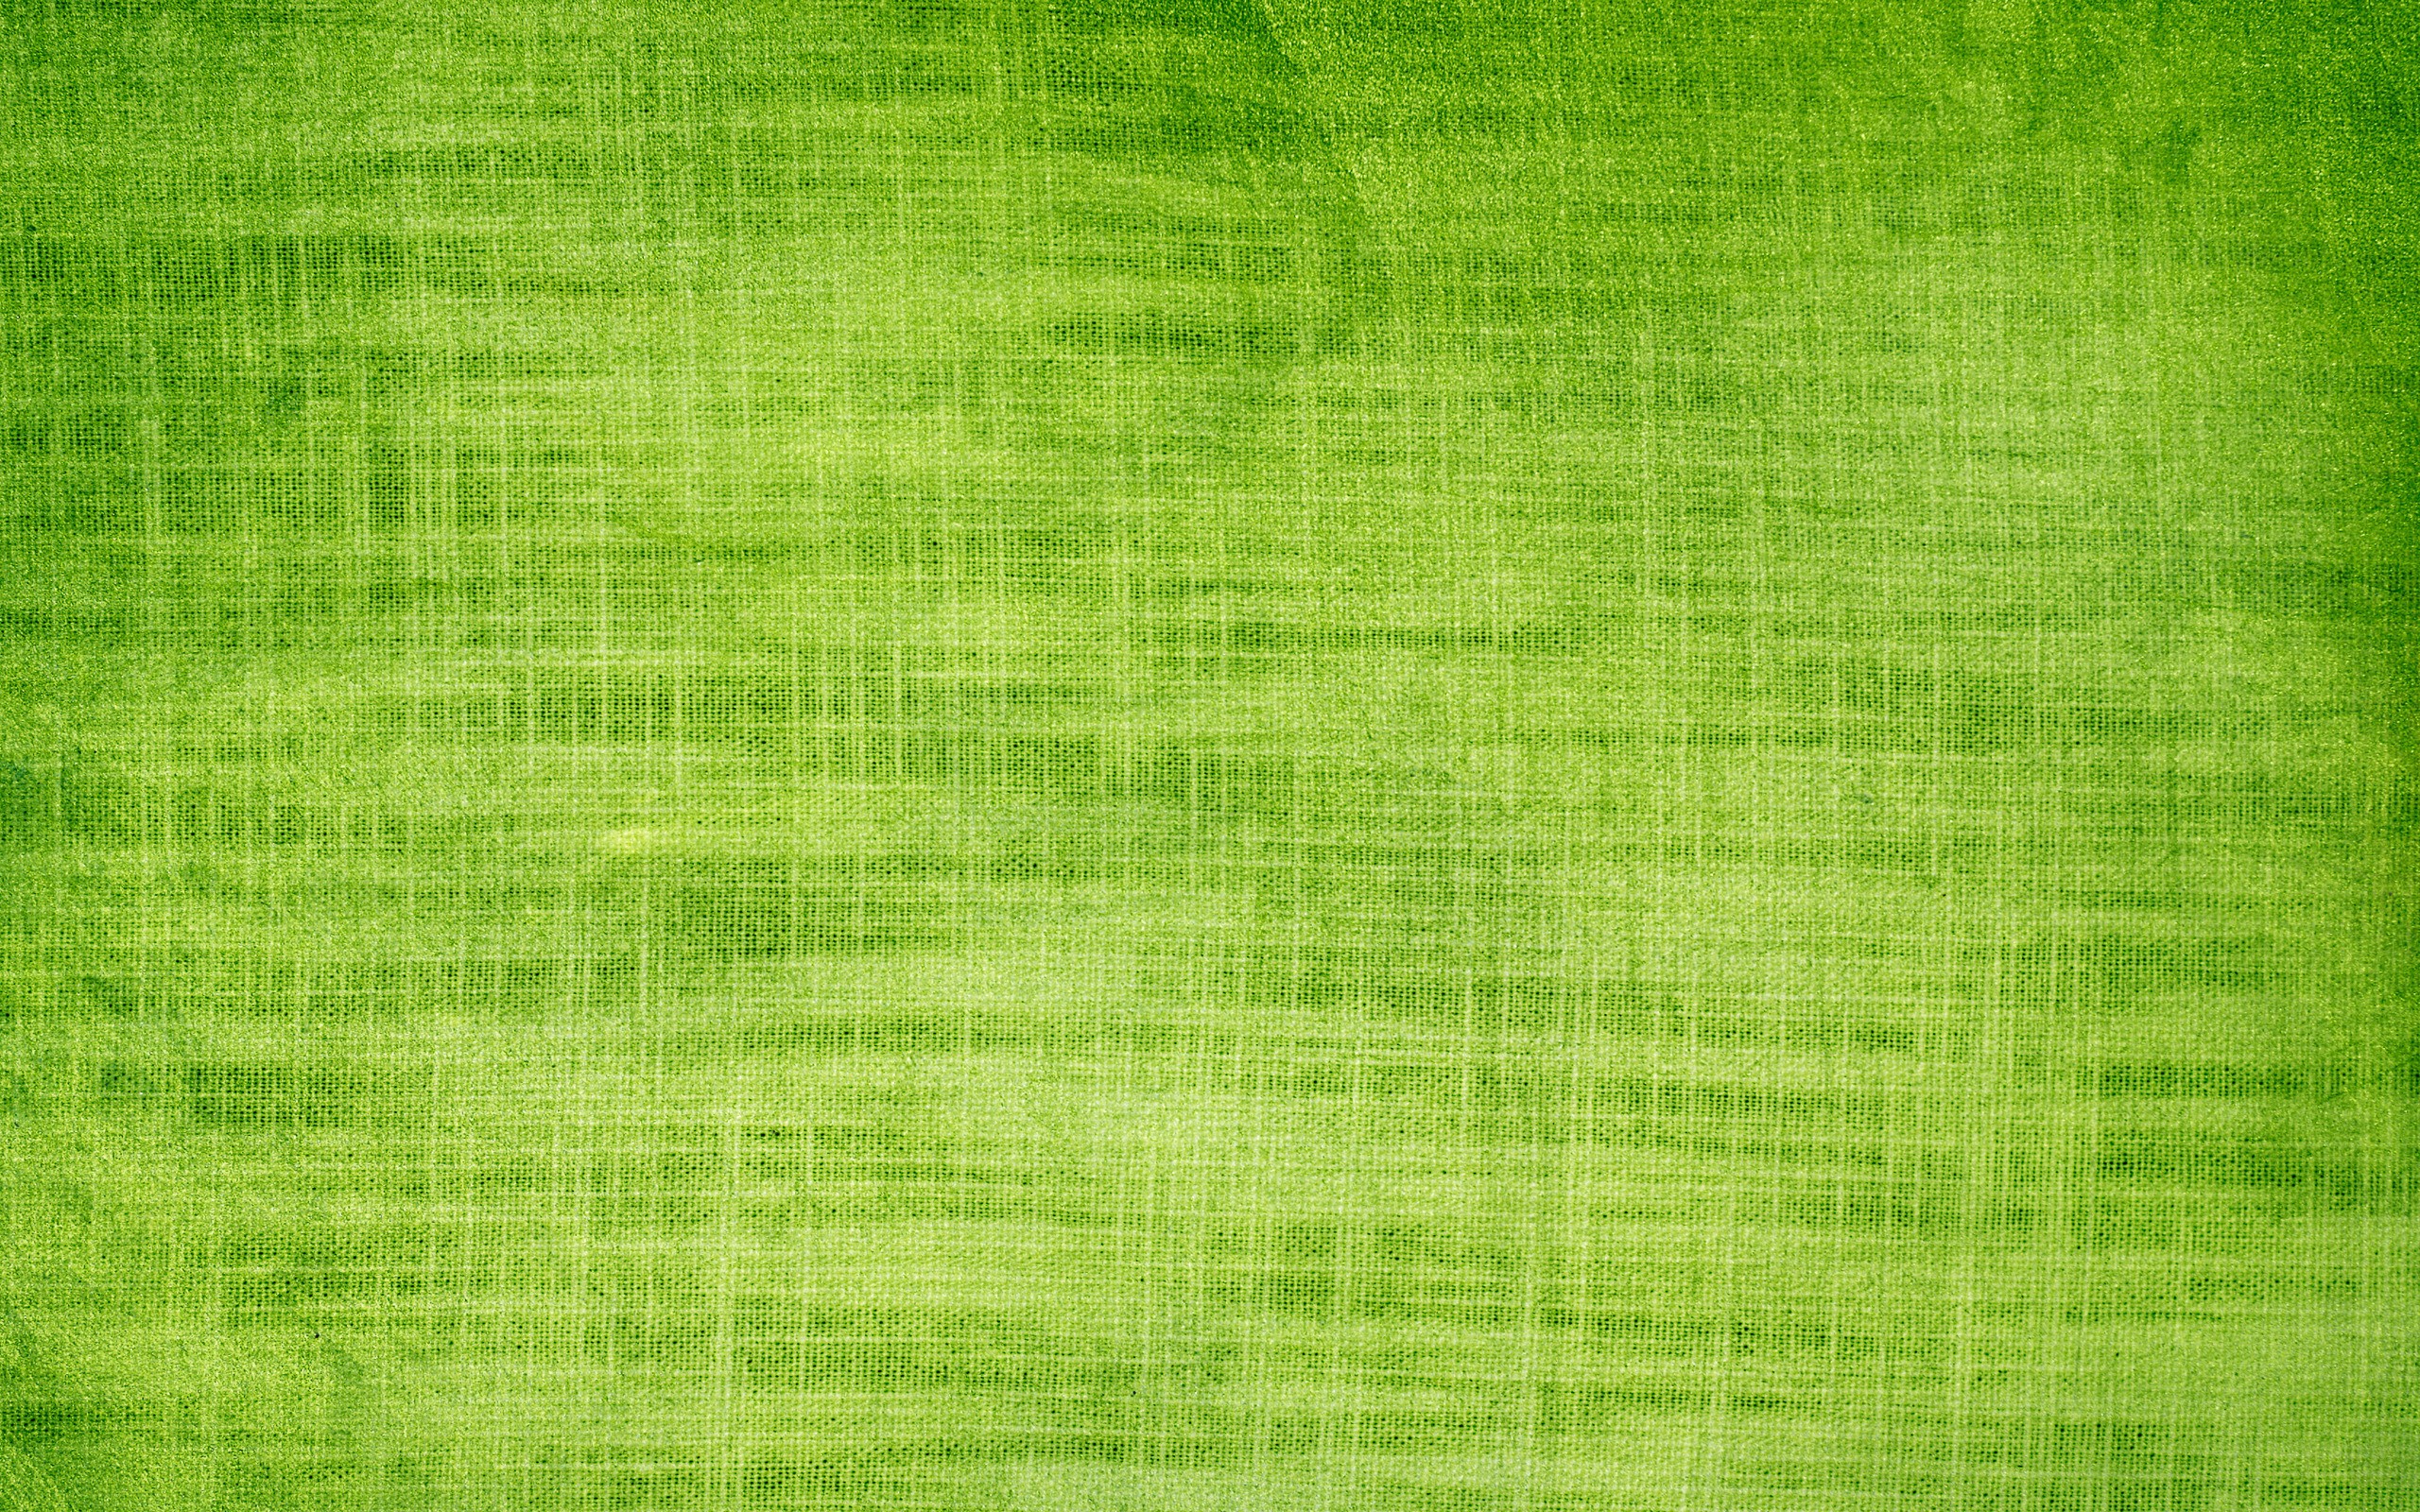 Green Fabric Texture Wallpaper Stock Photos